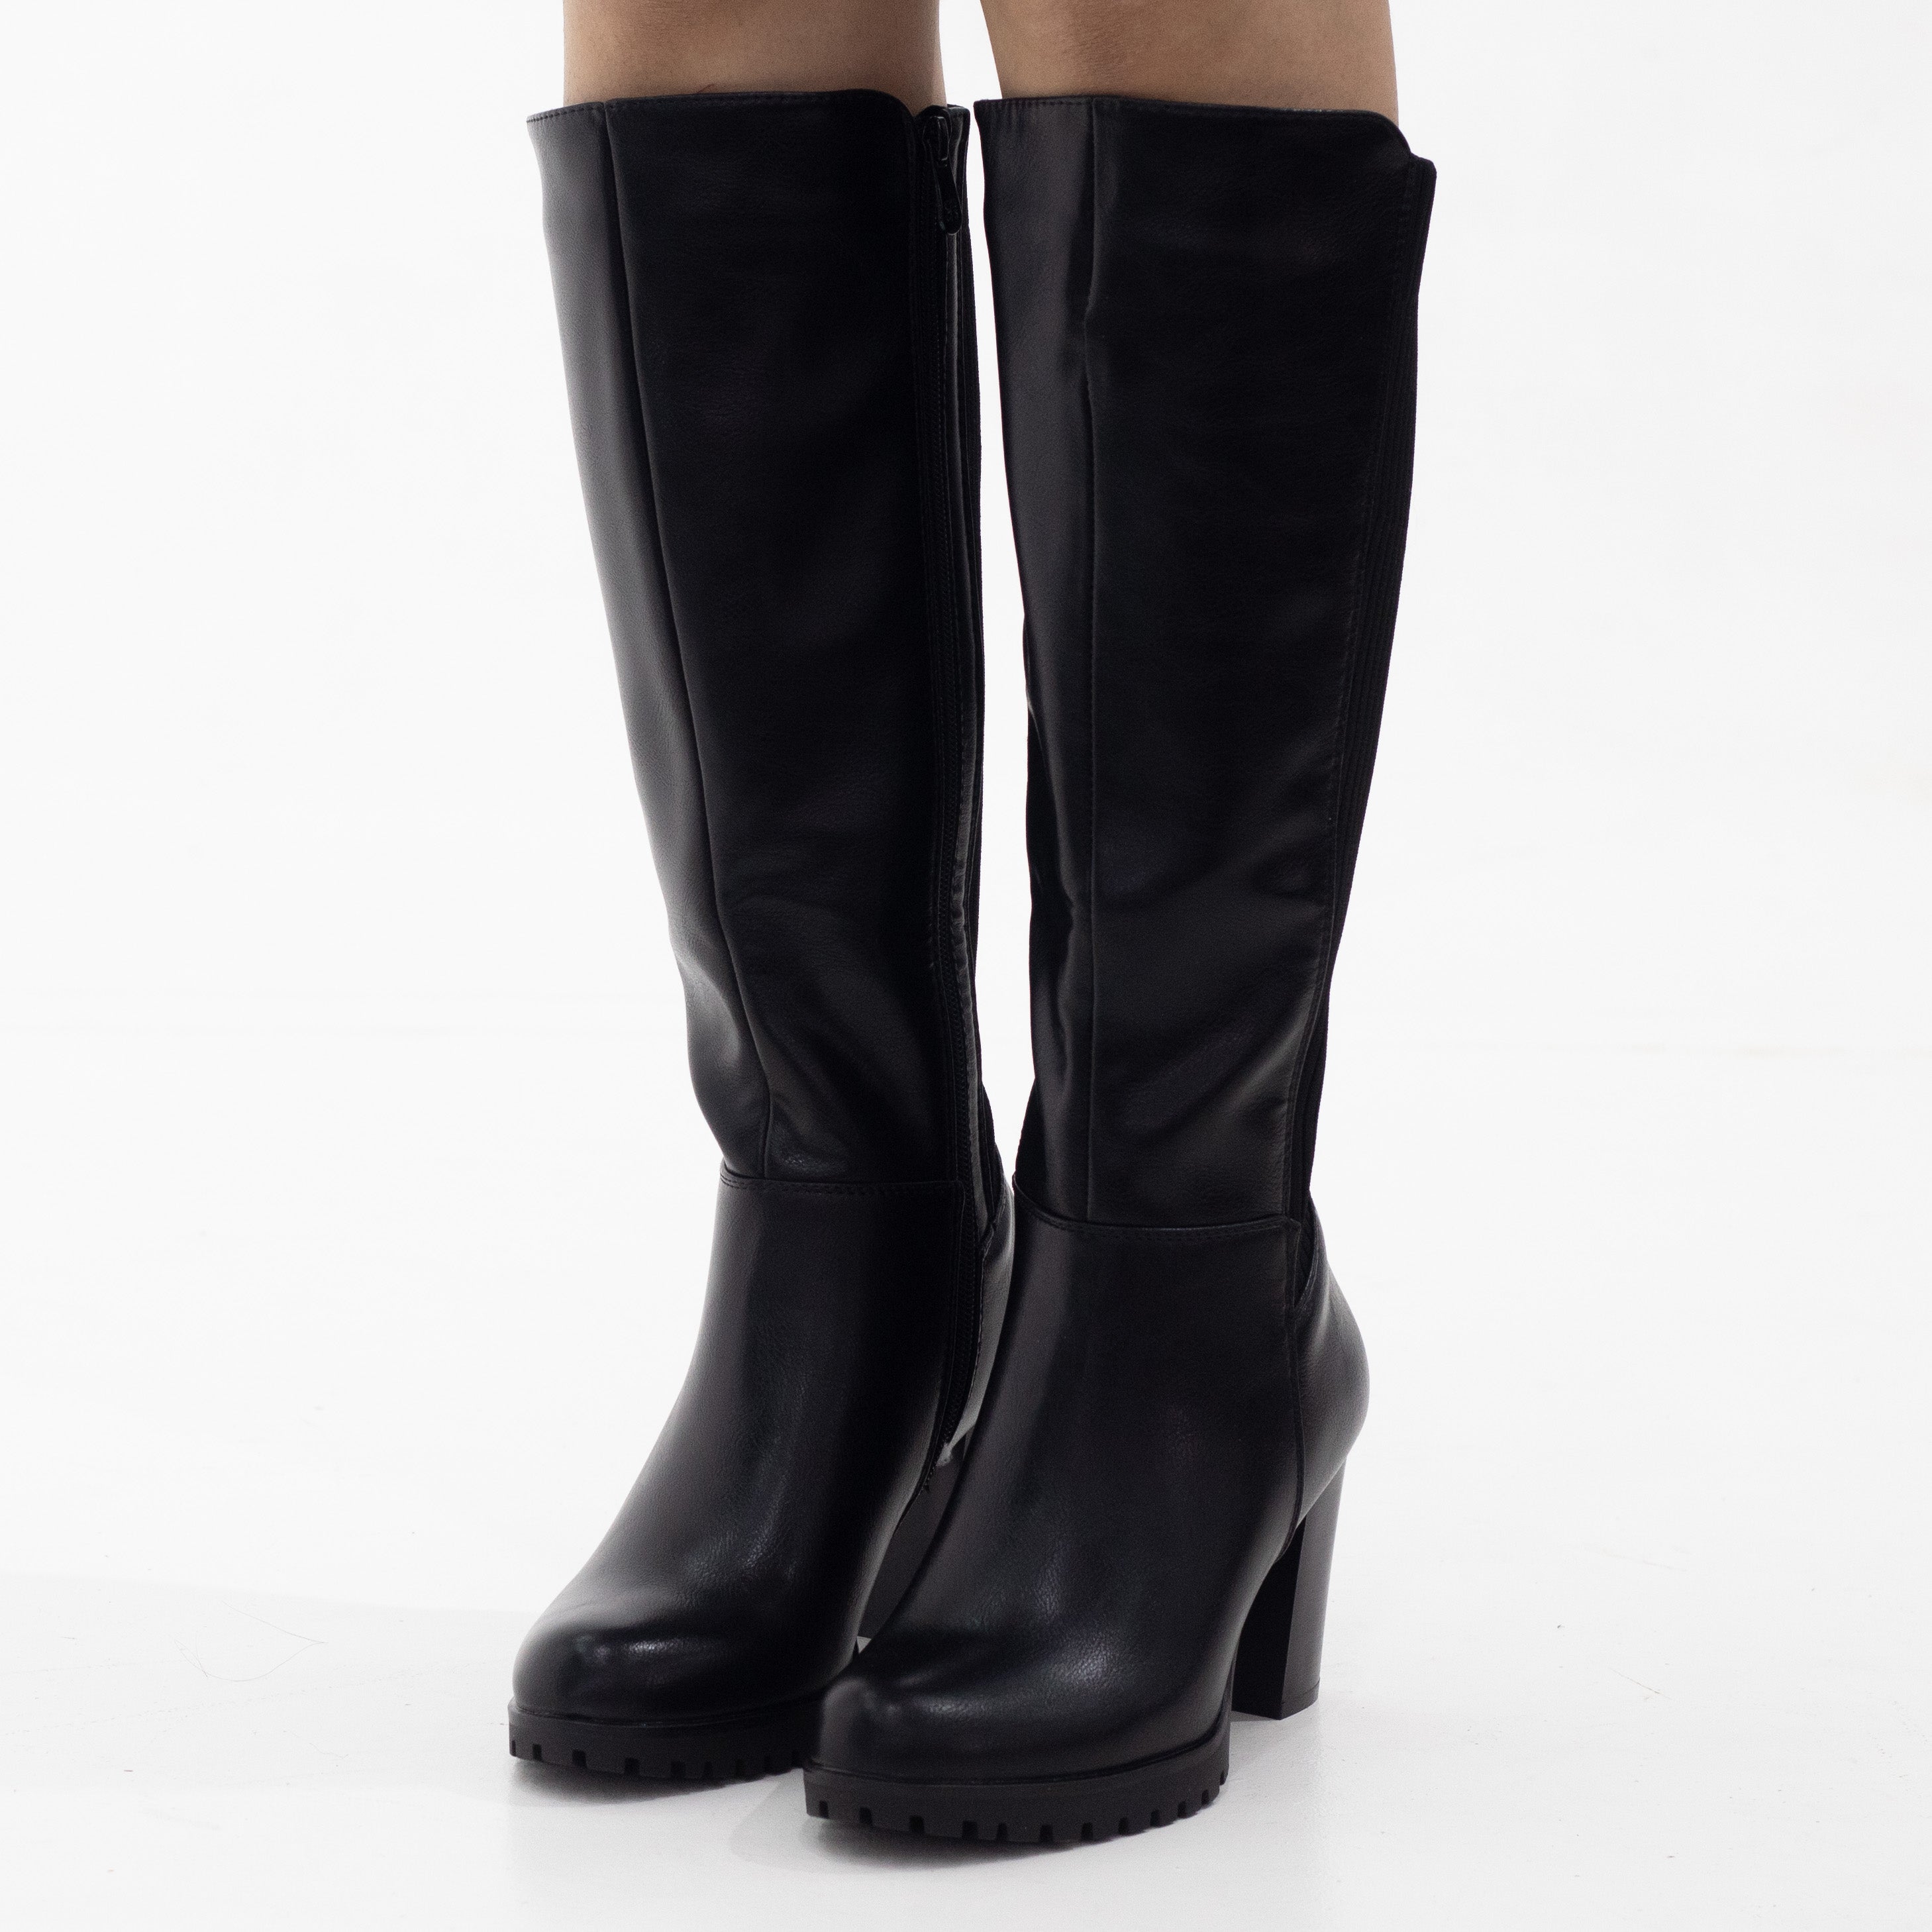 Wearever Wear Ever Women's Julia Black Knee High Riding Boots